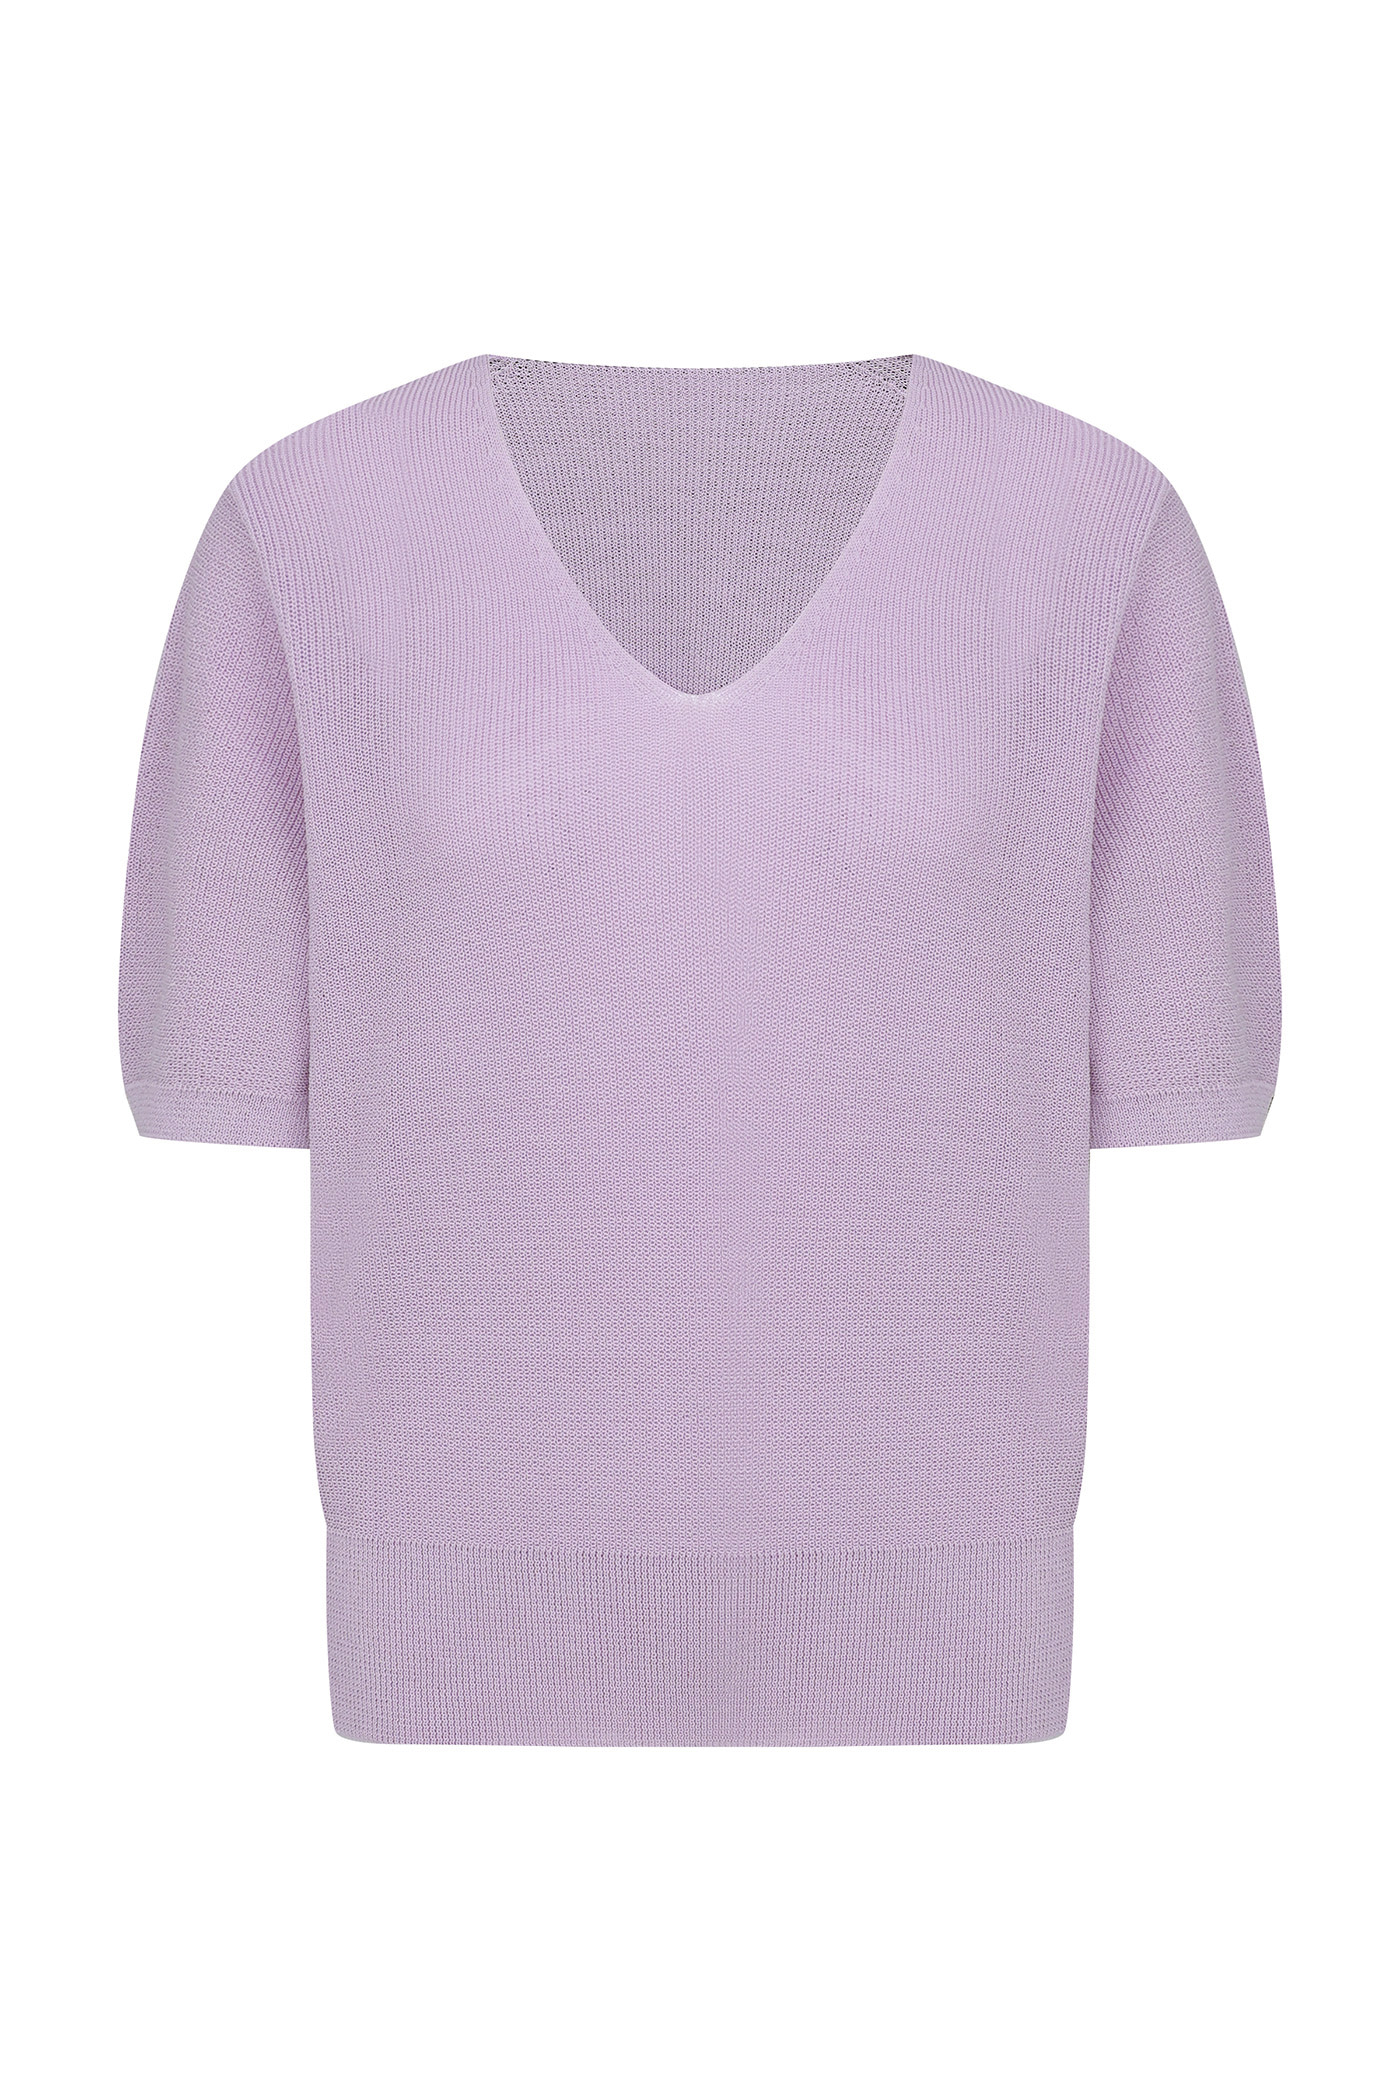 Linen Plain V Knit-Light Purple